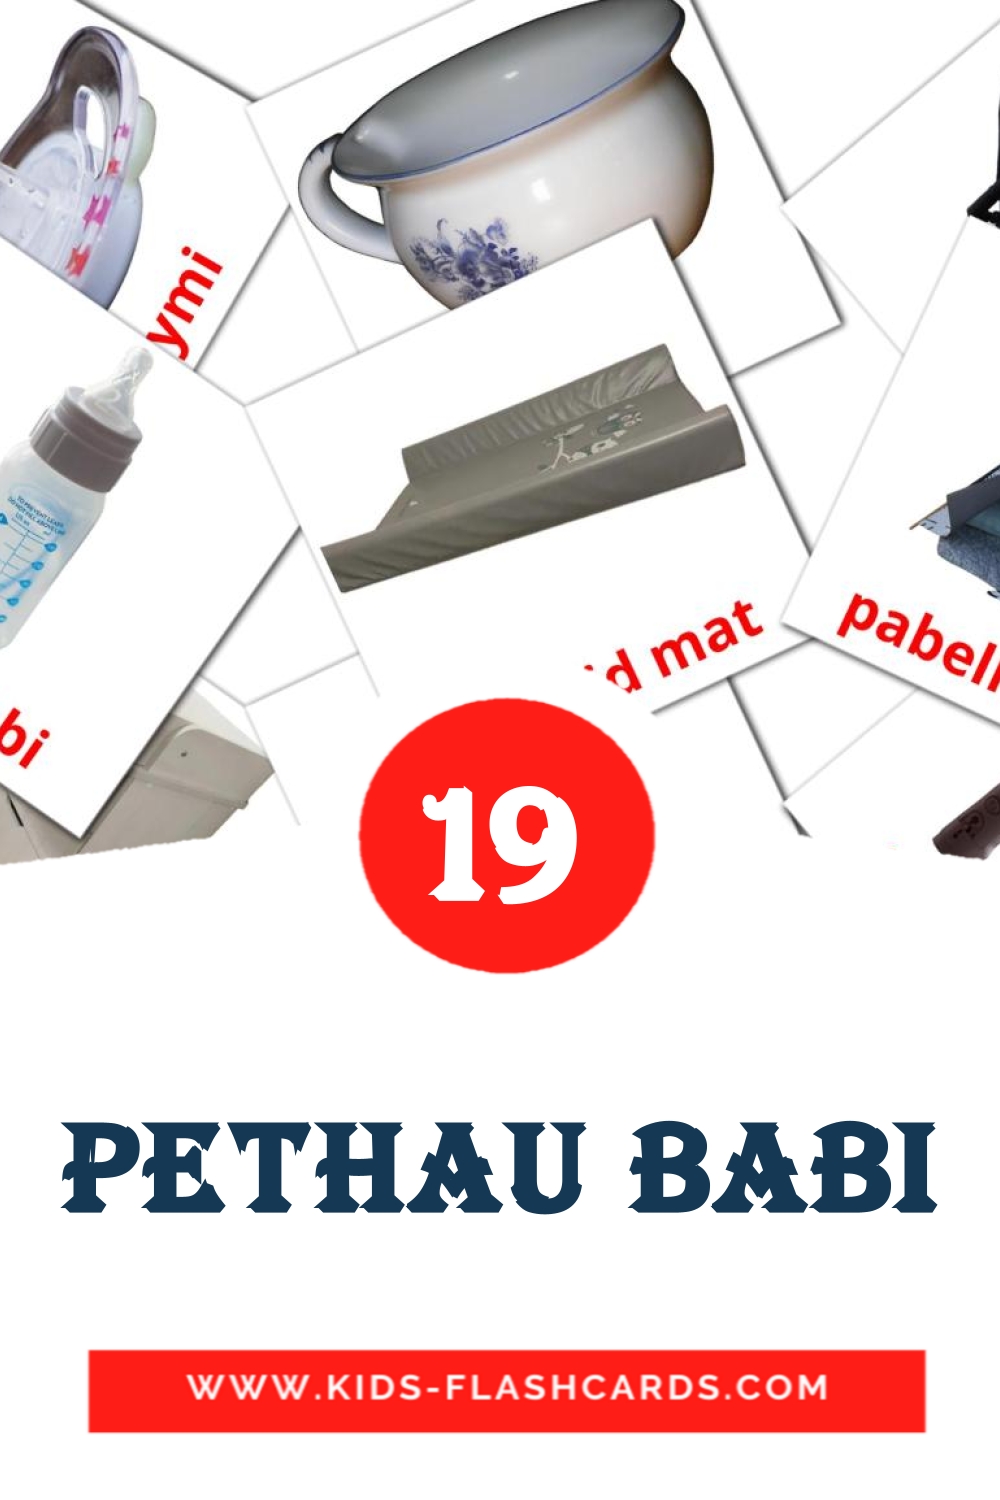 19 carte illustrate di Pethau babi per la scuola materna in gallese